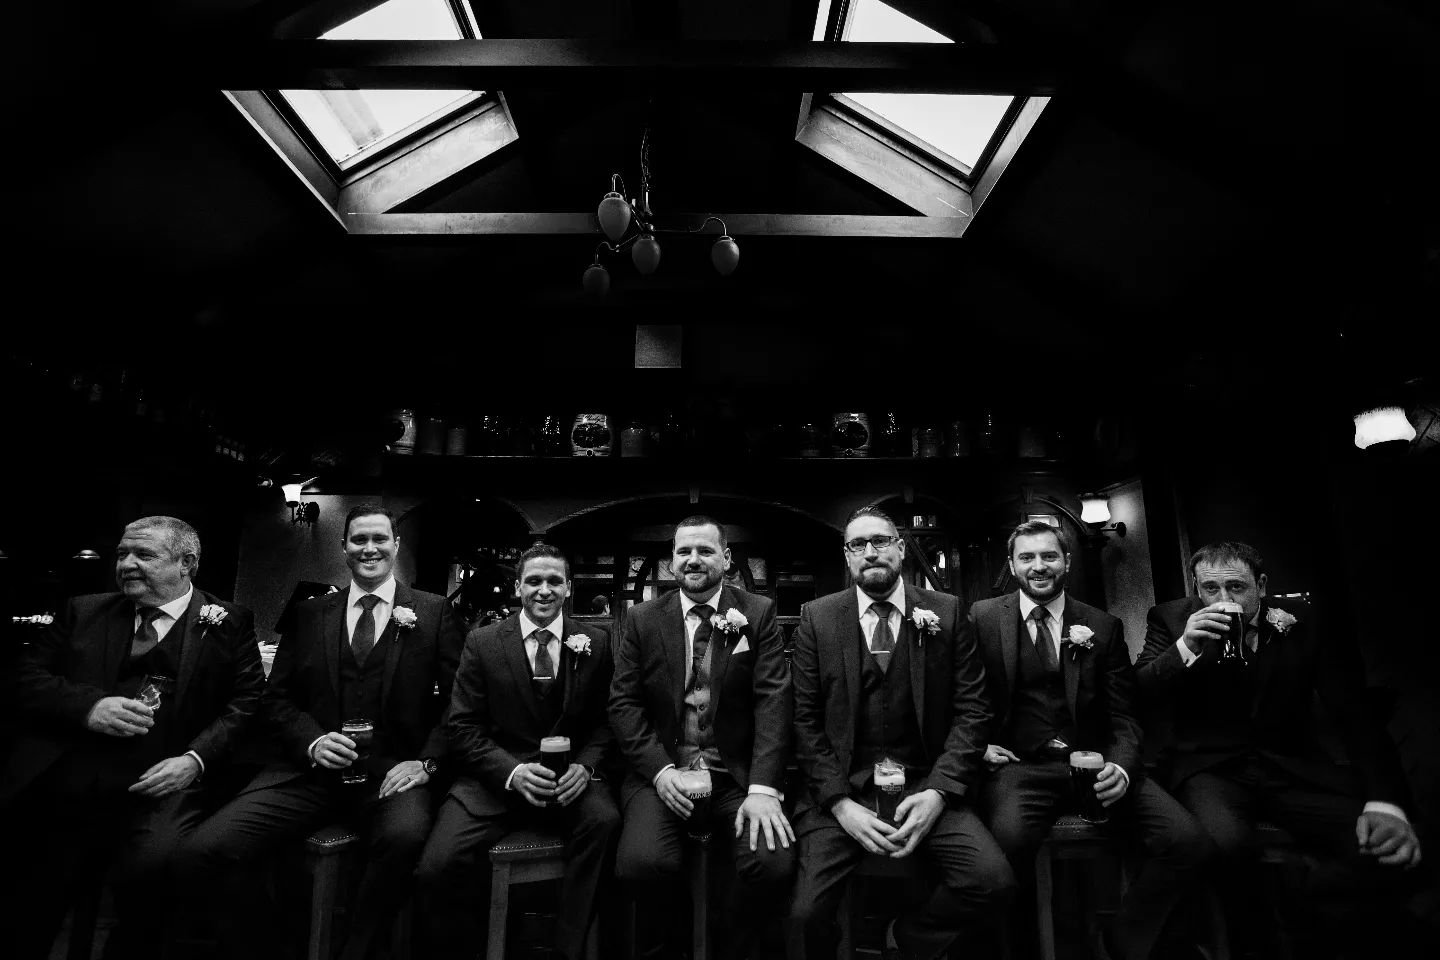 An oldie but a goodie. @cnrmc and his men just enjoying a casual pint of plain in @frankquinnhorseandhound. 

#irishweddings #irishweddingphotographer #groom #groomsmen #weddingphotography #weddinginspiration